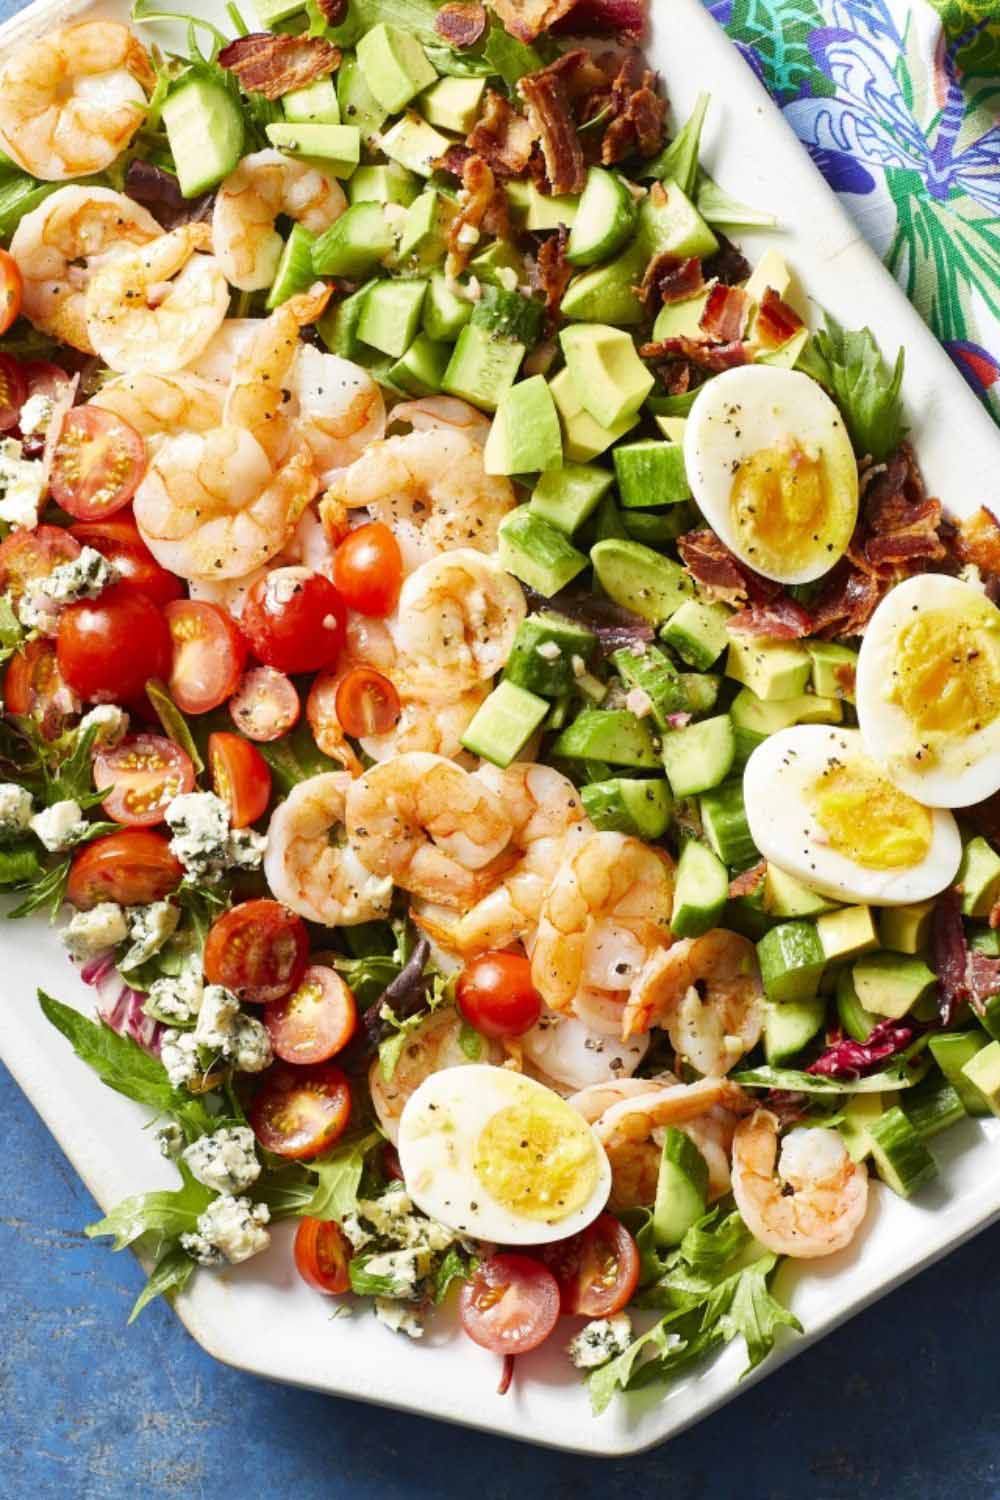 2. Shrimp Cobb Salad with Dijon Dressing